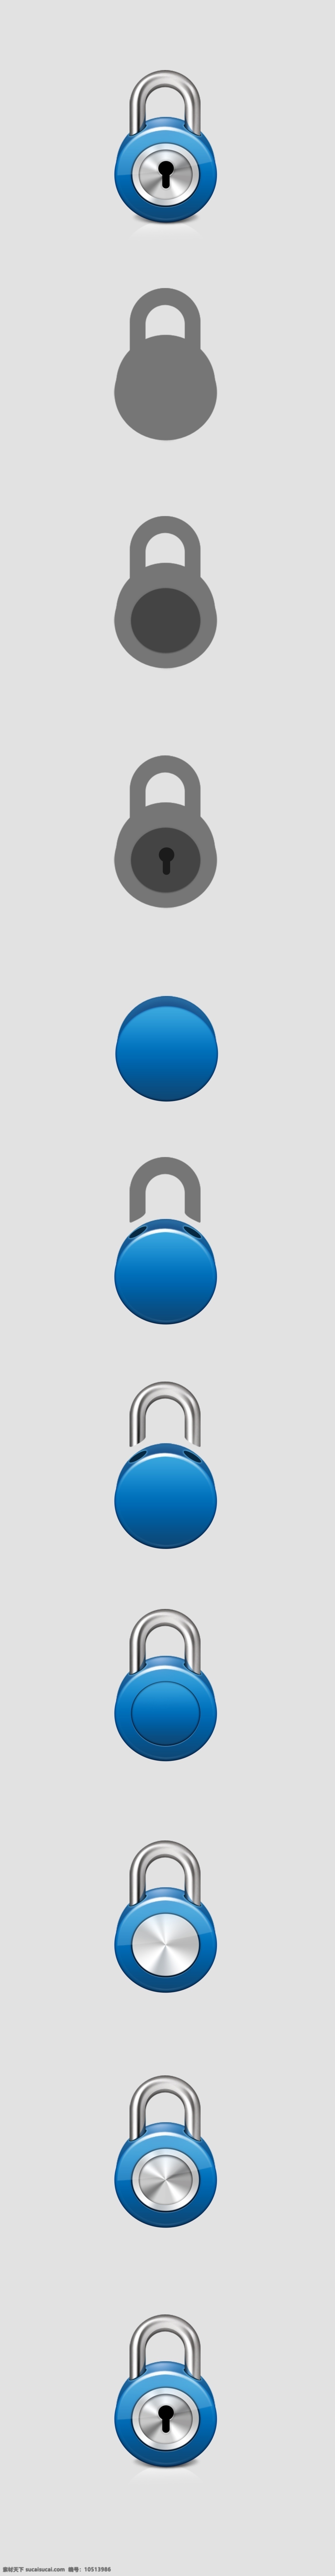 蓝色 质感 锁 图标 图标设计 icon设计 icon 网页图标 网页icon icon图标 锁图标 质感图标 金属图标